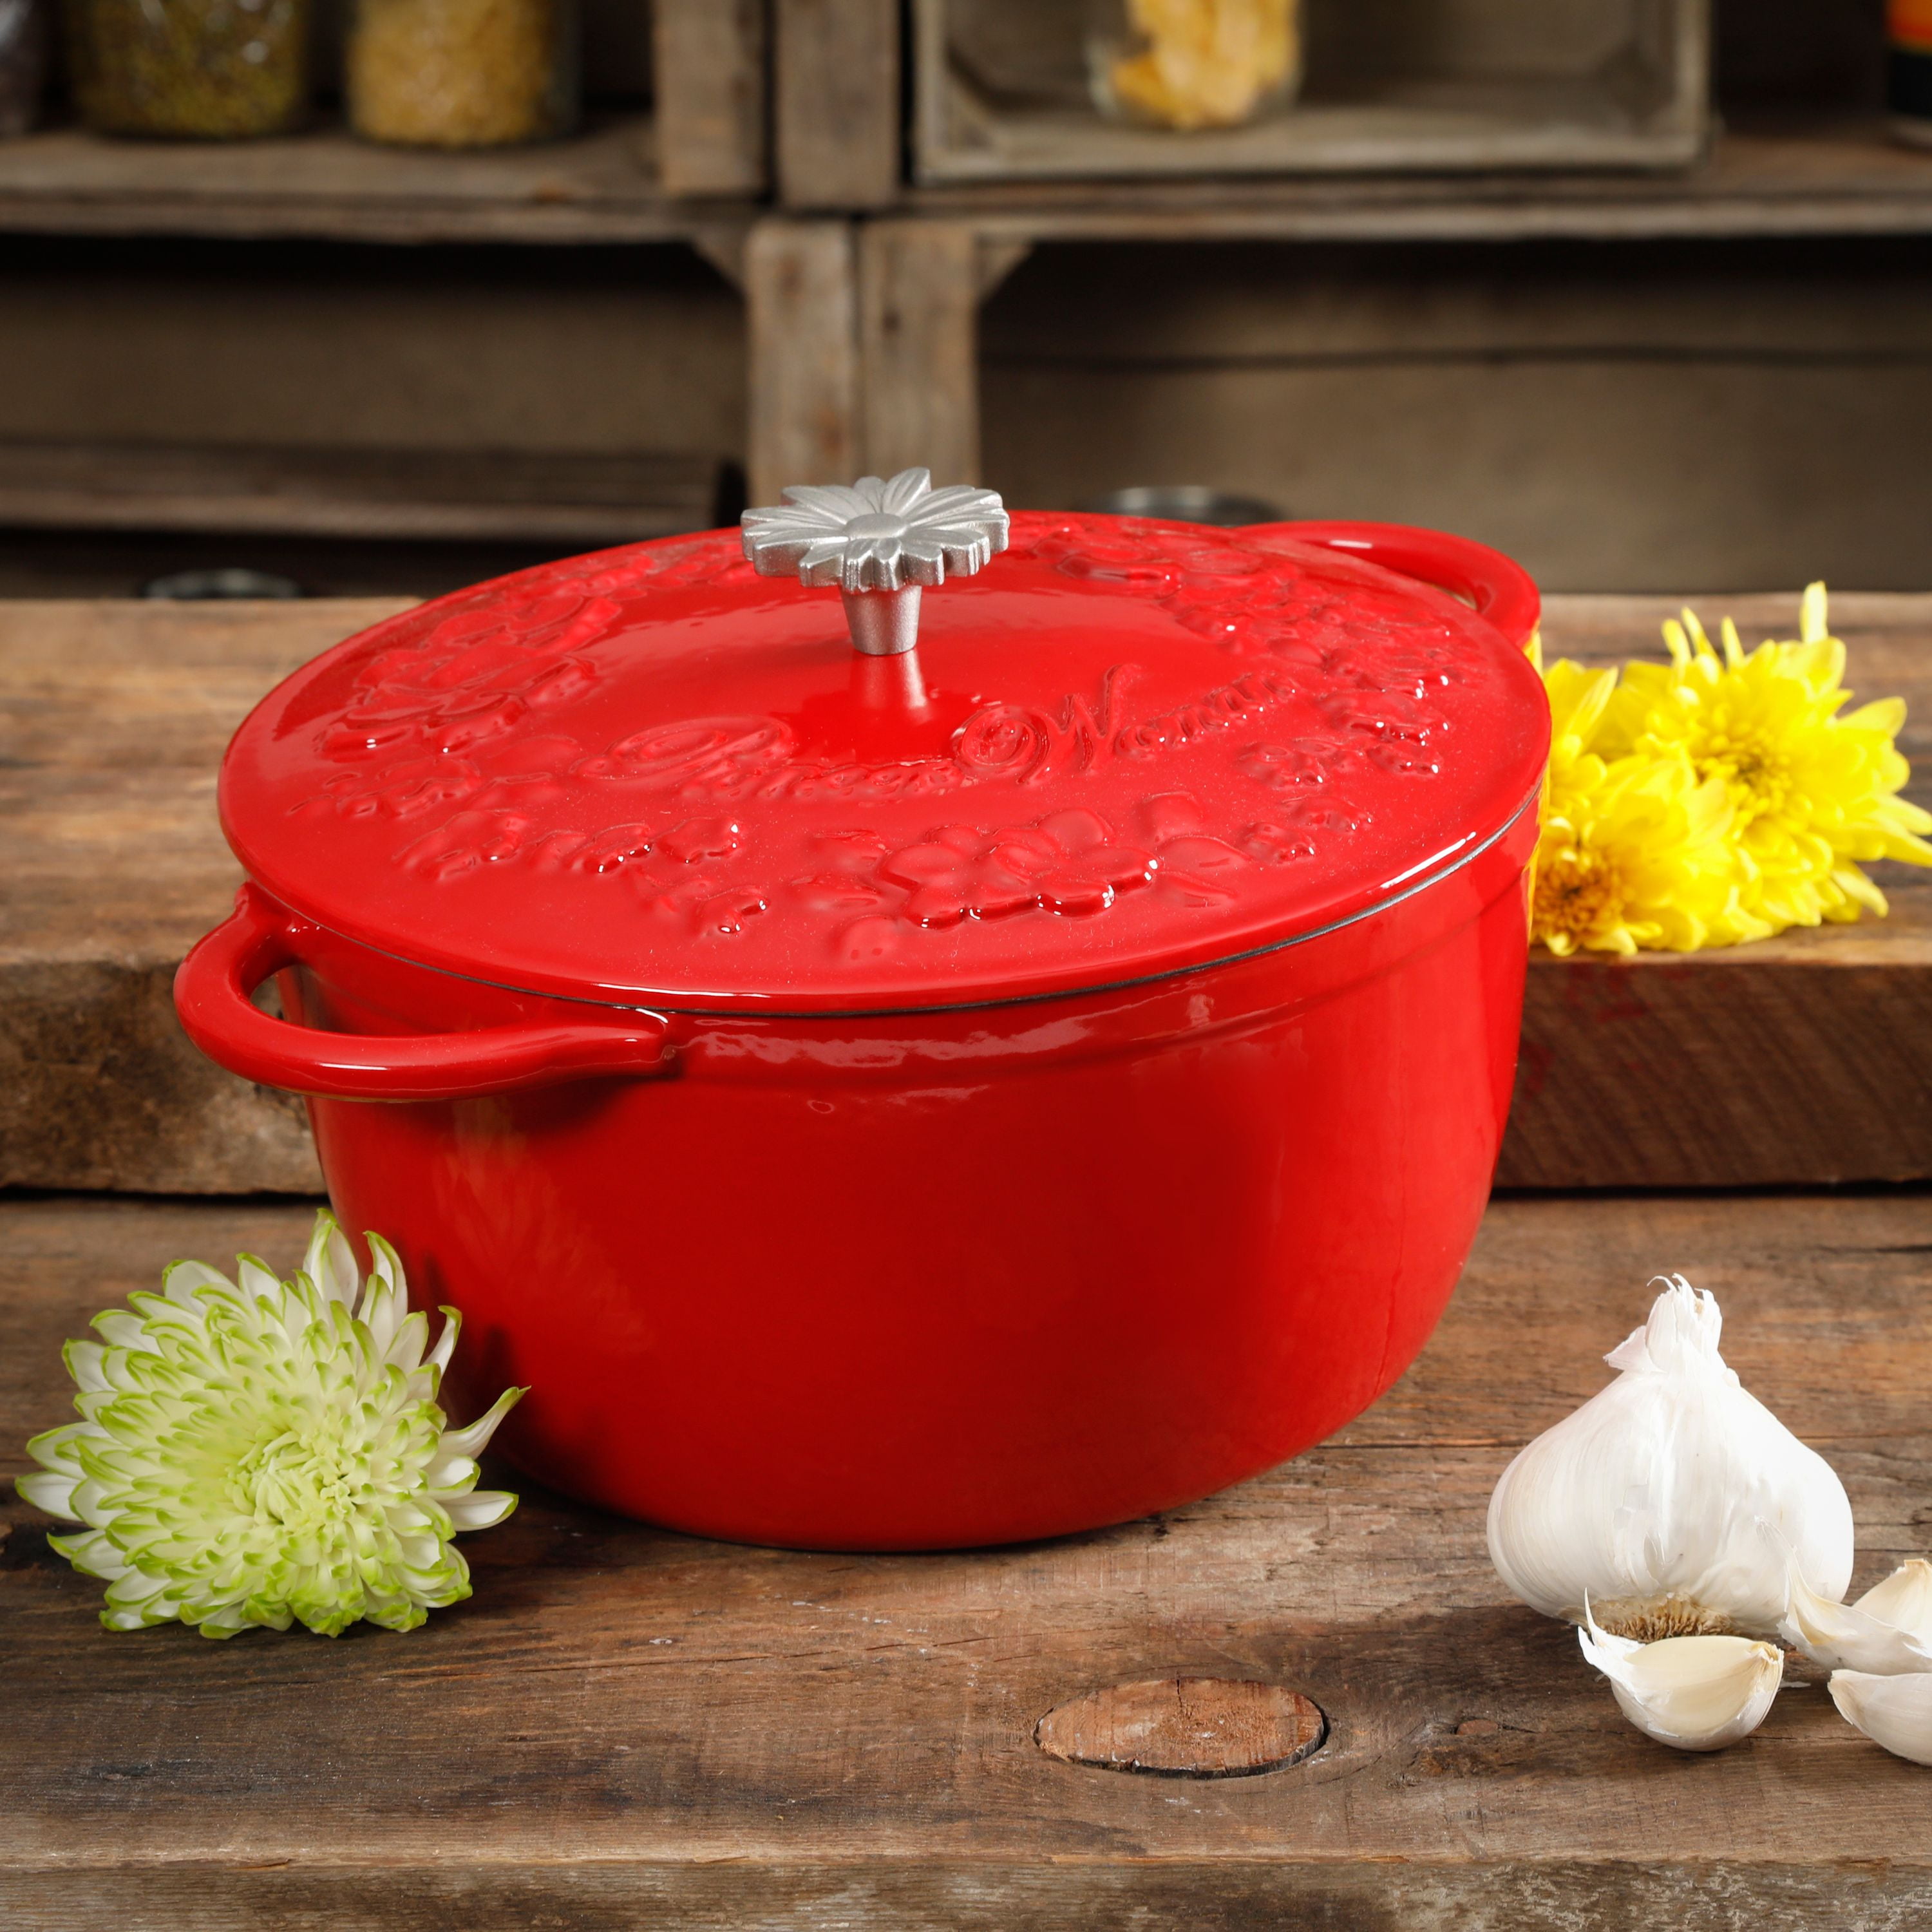 Red Cuisinart 3.5 Enameled Dutch Oven for Sale in Yorba Linda